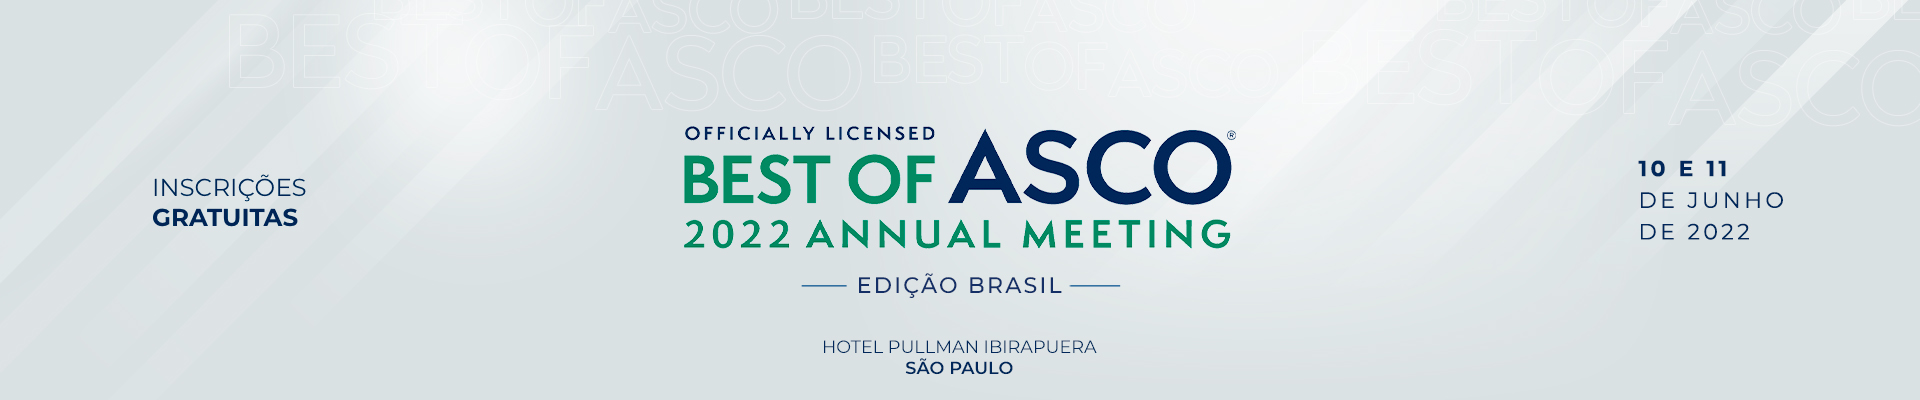 LAGOG – Best of ASCO 2022 Annual Meeting